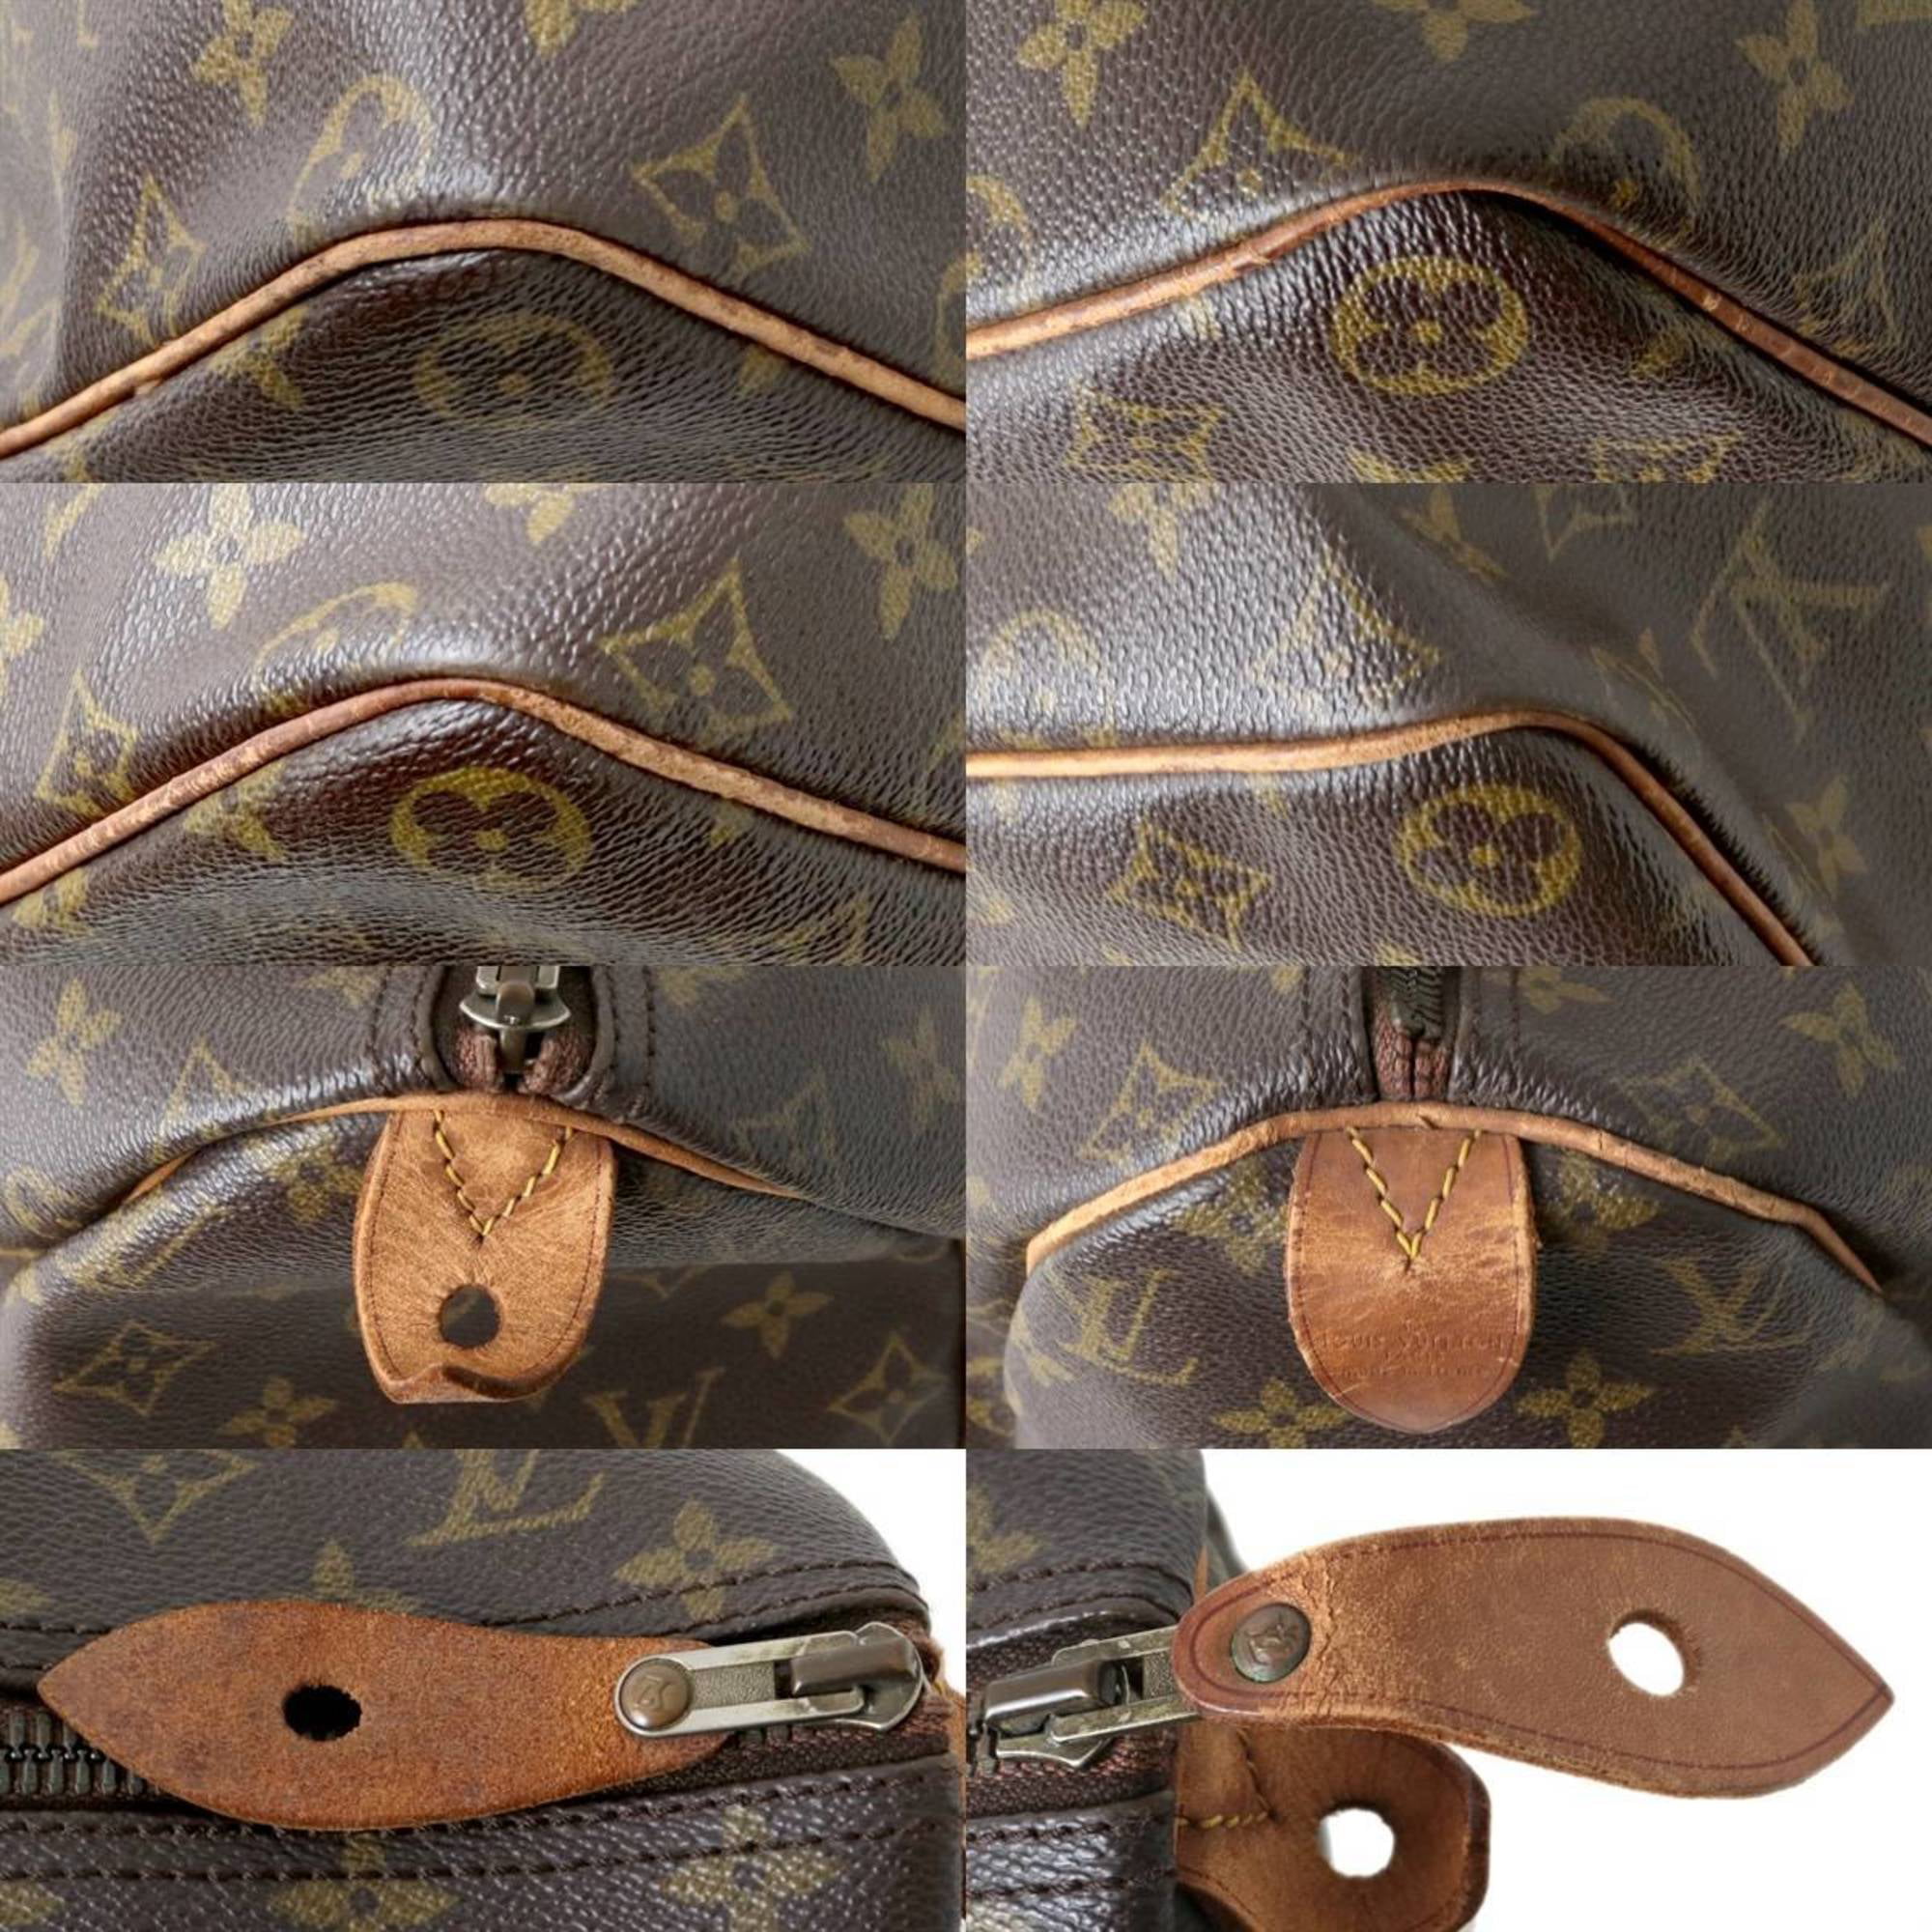 LOUIS VUITTON Louis Vuitton Speedy 40 Handbag Monogram M41522 MB0950